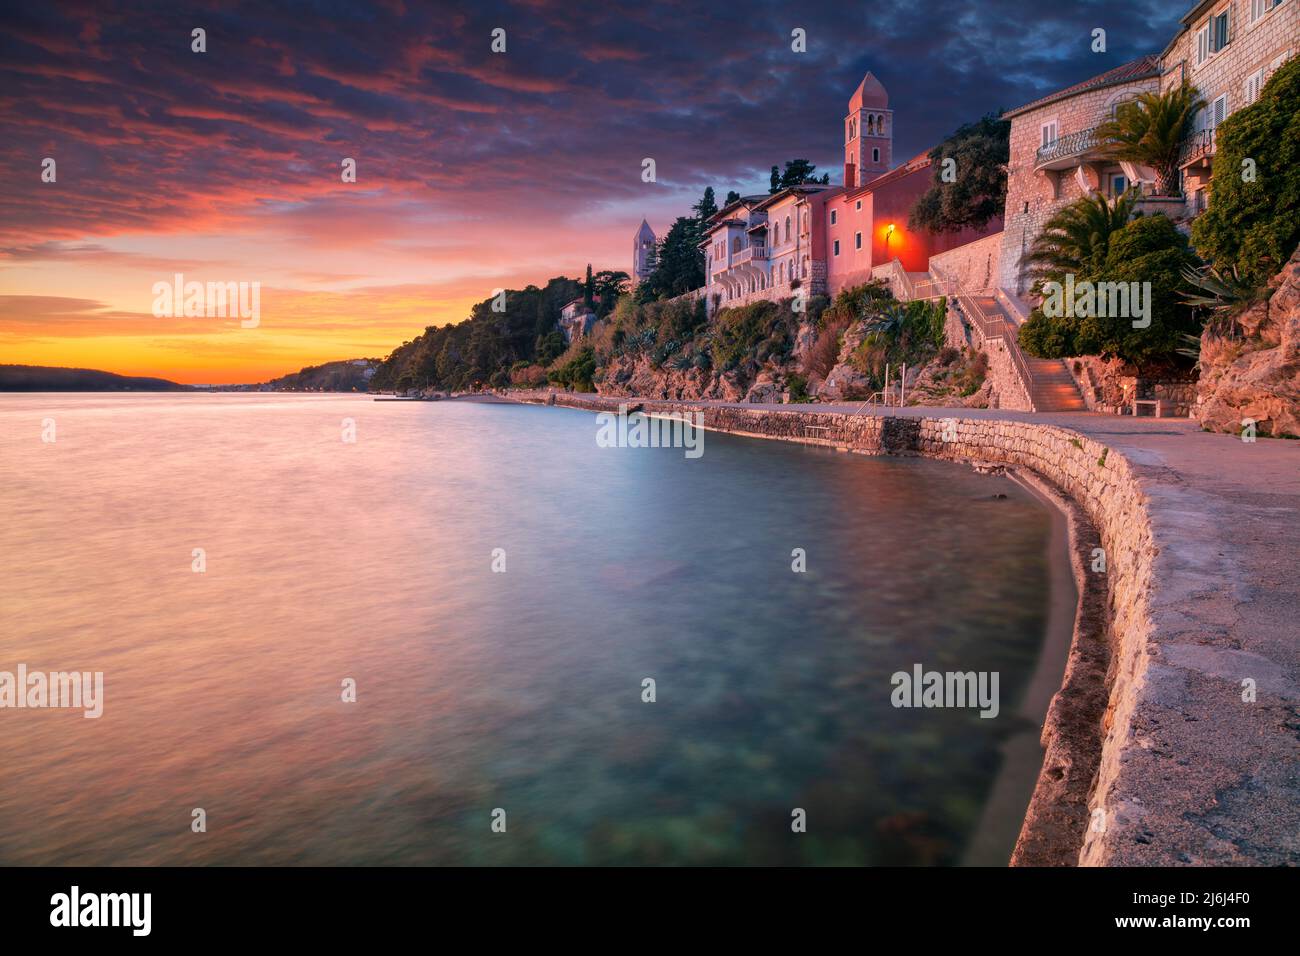 Rab, Insel Rab, Kroatien. Stadtbild des ikonischen Dorfes Rab, Kroatien auf der Insel Rab bei Sonnenuntergang. Stockfoto